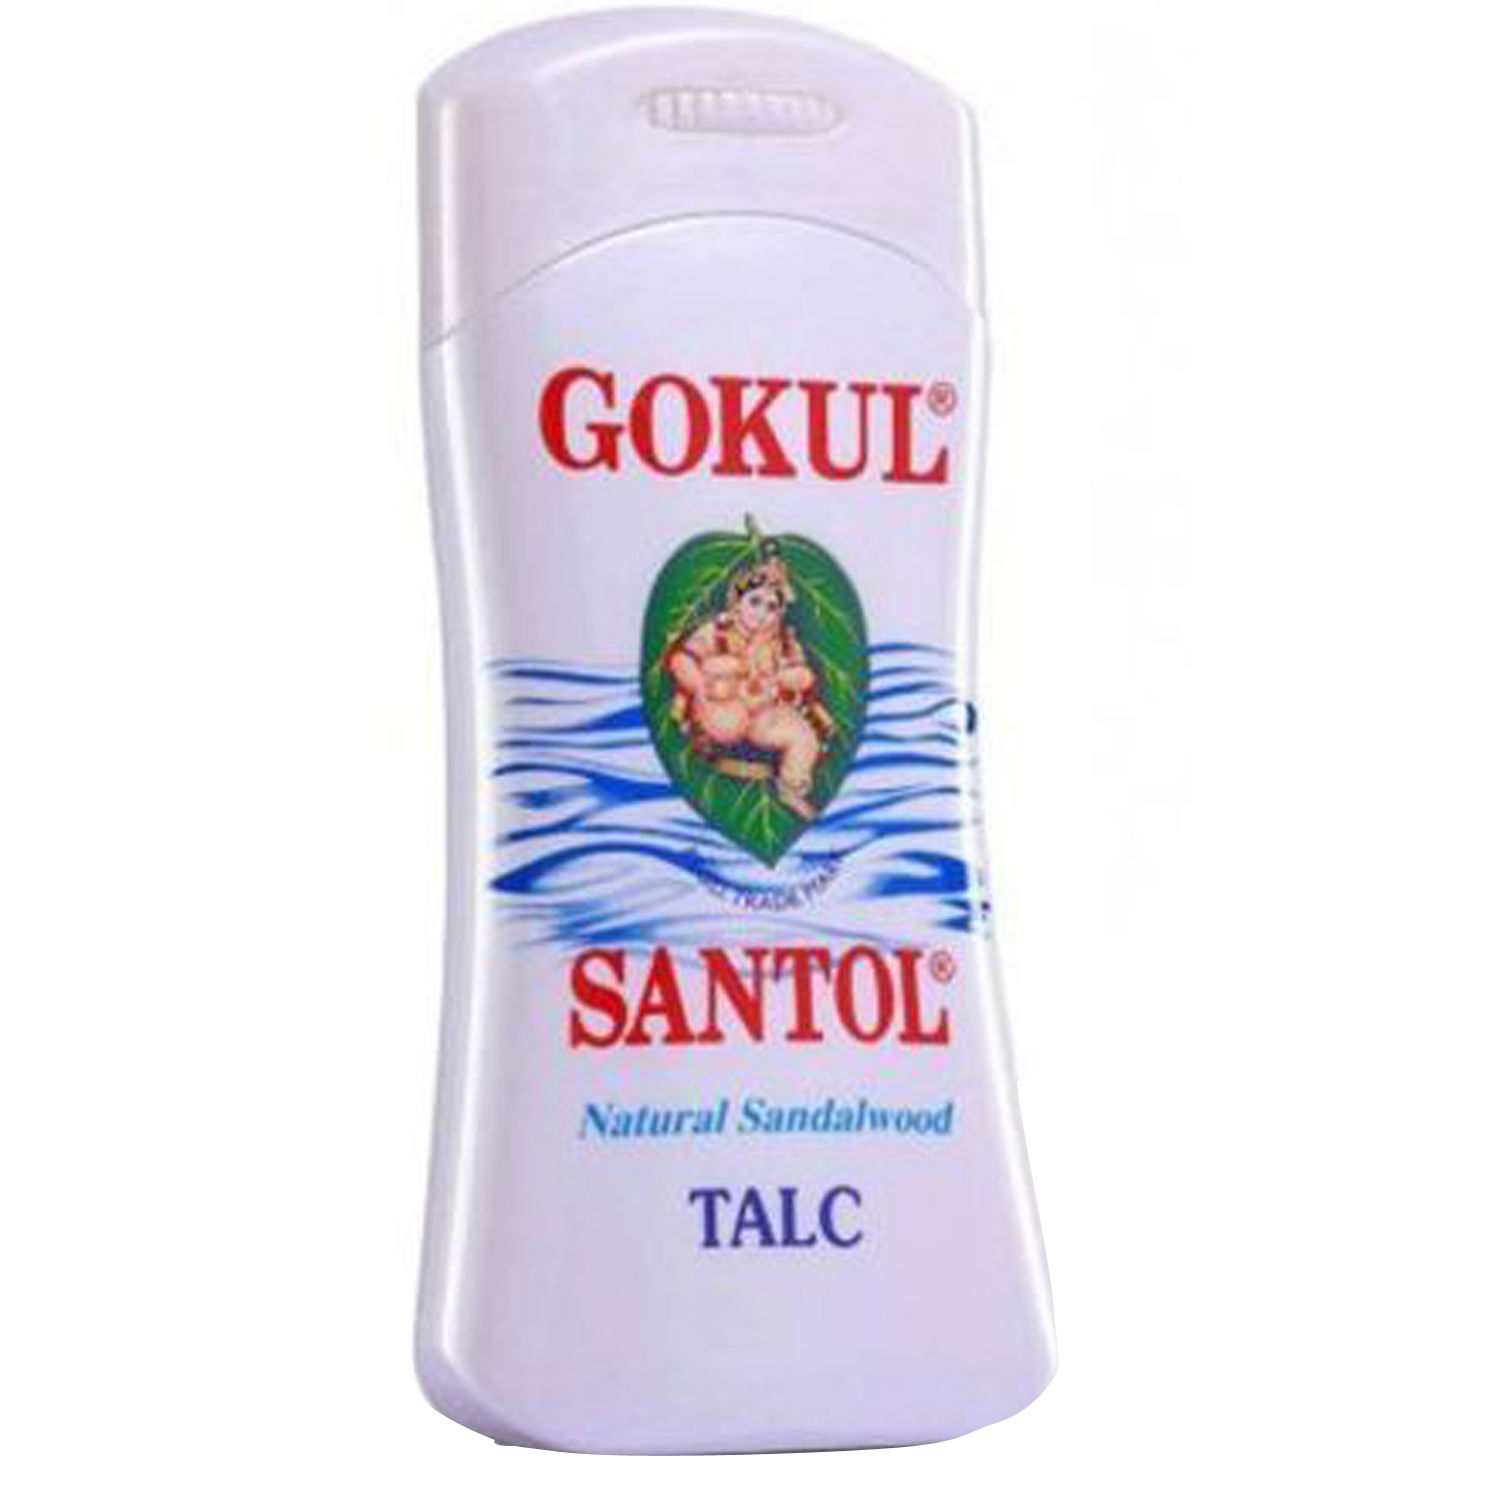 Gokul Santol Sandalwood Talcum Powder, 140 gm, Pack of 1 